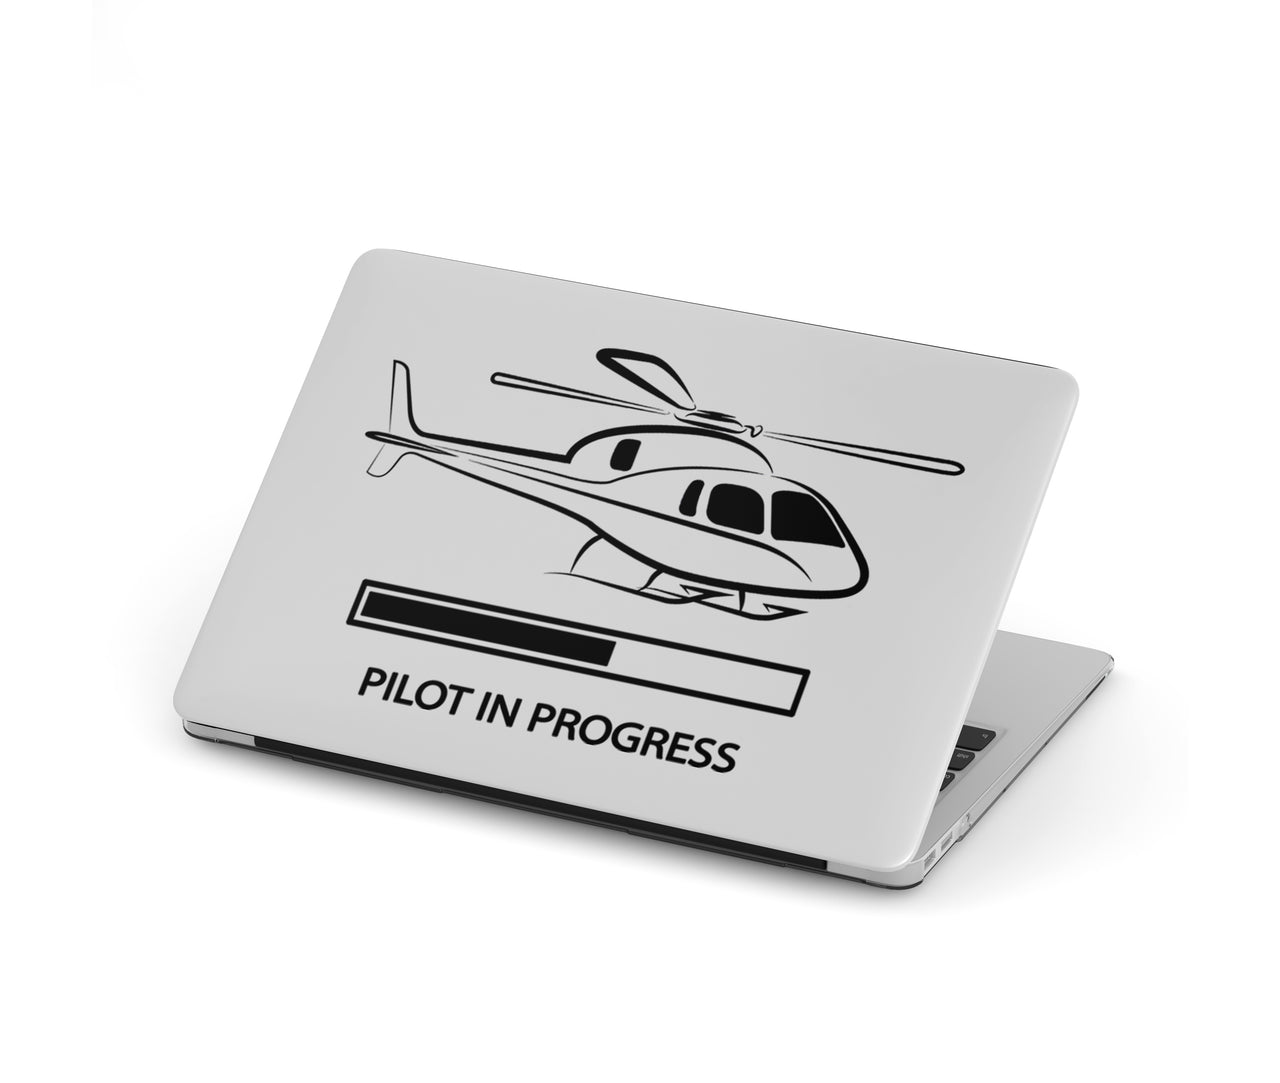 Pilot In Progress (Helicopter) Designed Macbook Cases